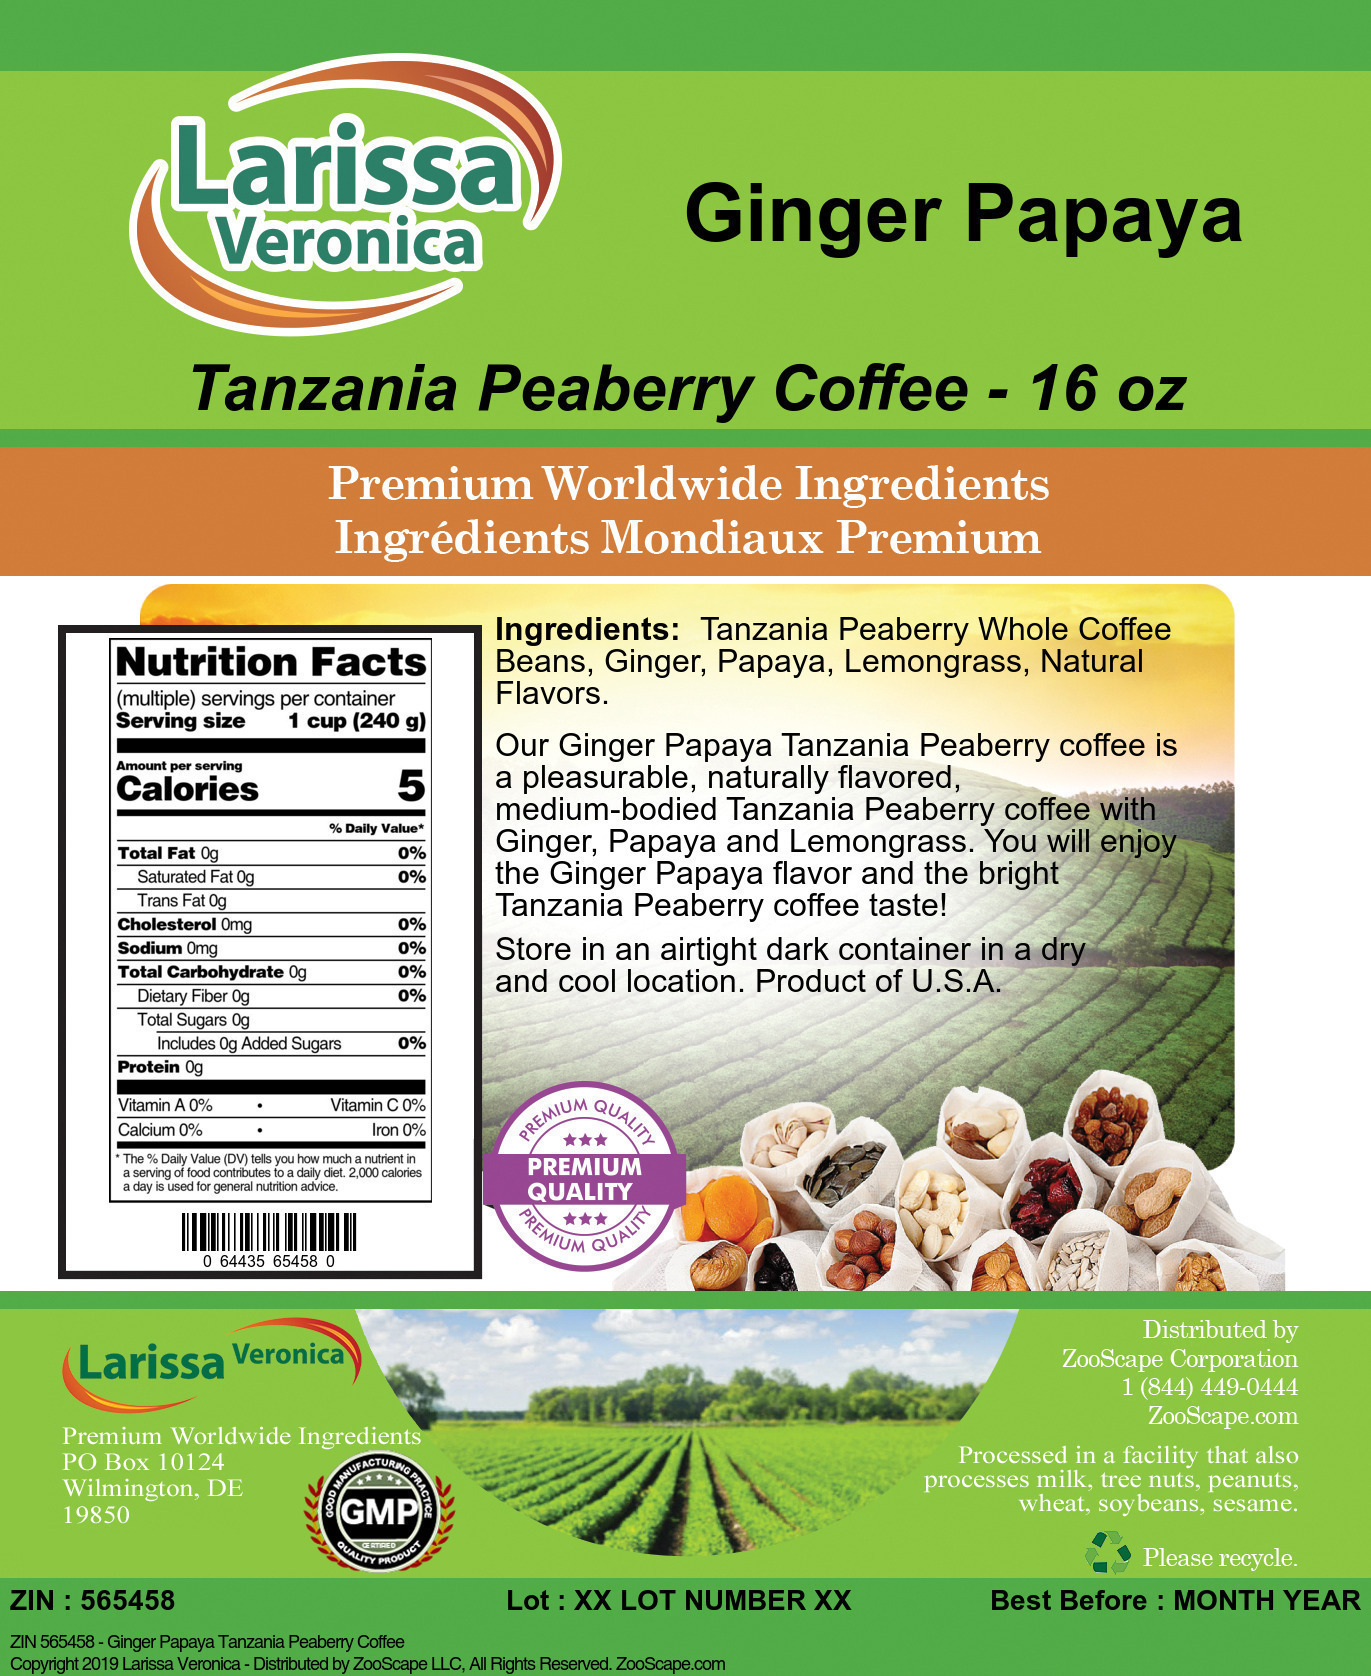 Ginger Papaya Tanzania Peaberry Coffee - Label